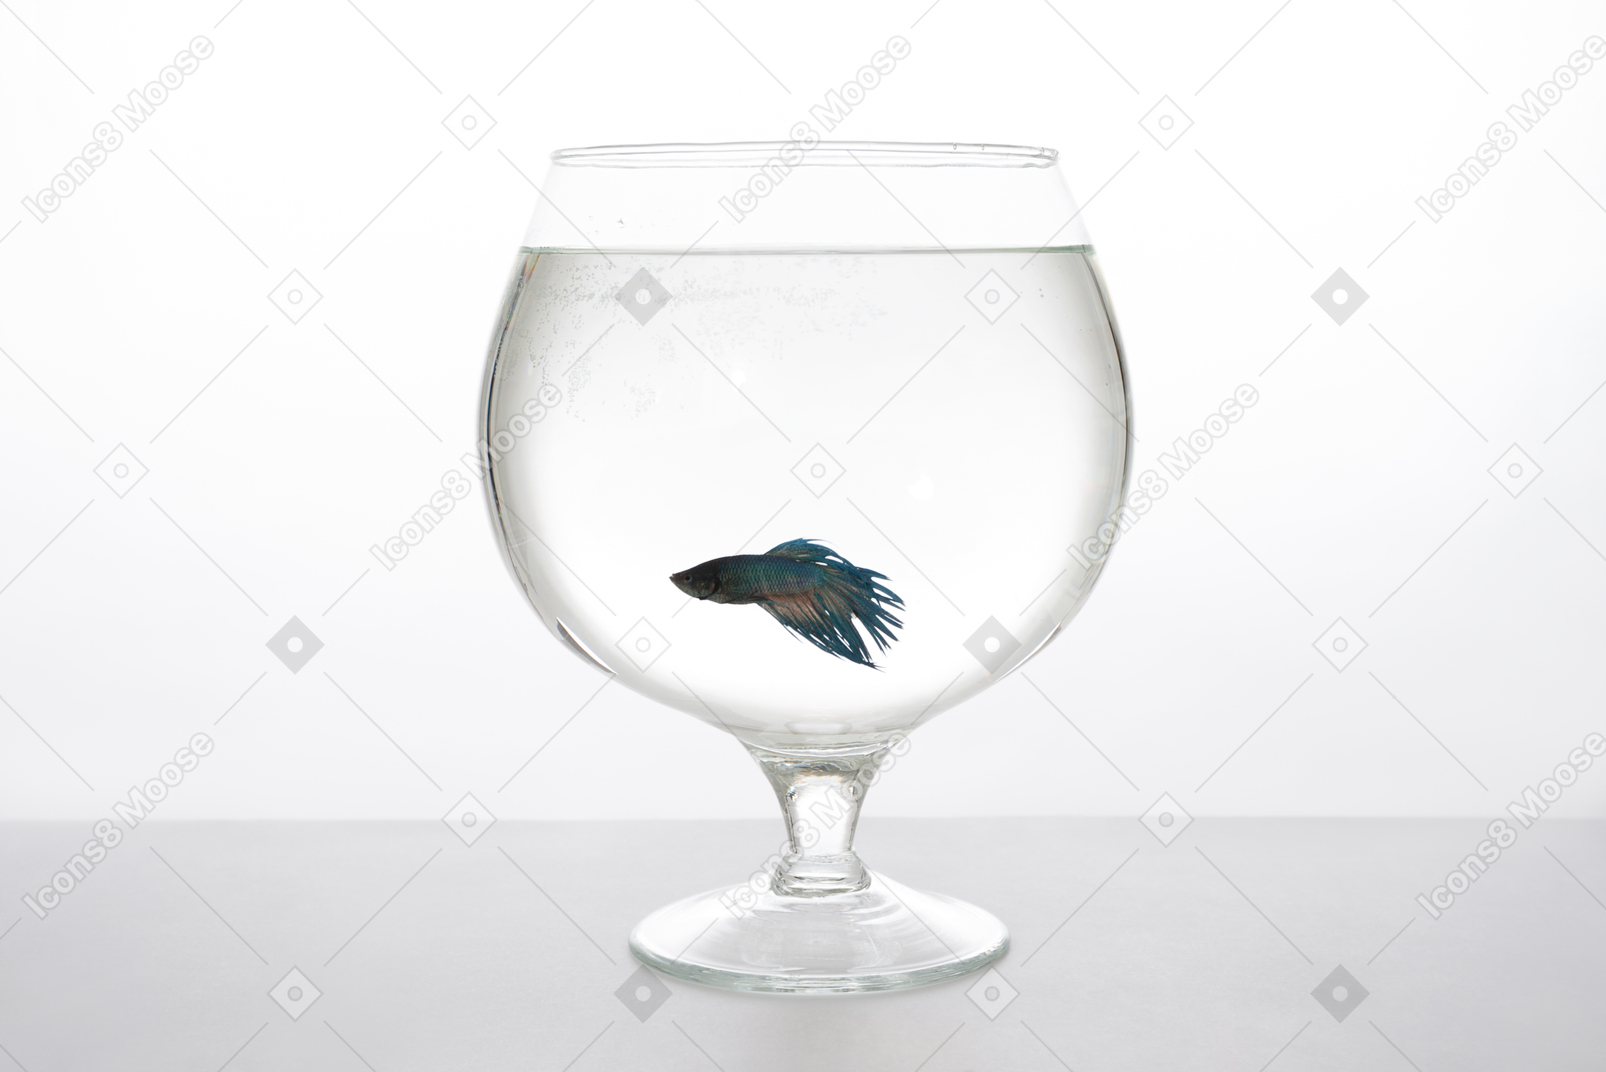 Blue fish in a brandy glass